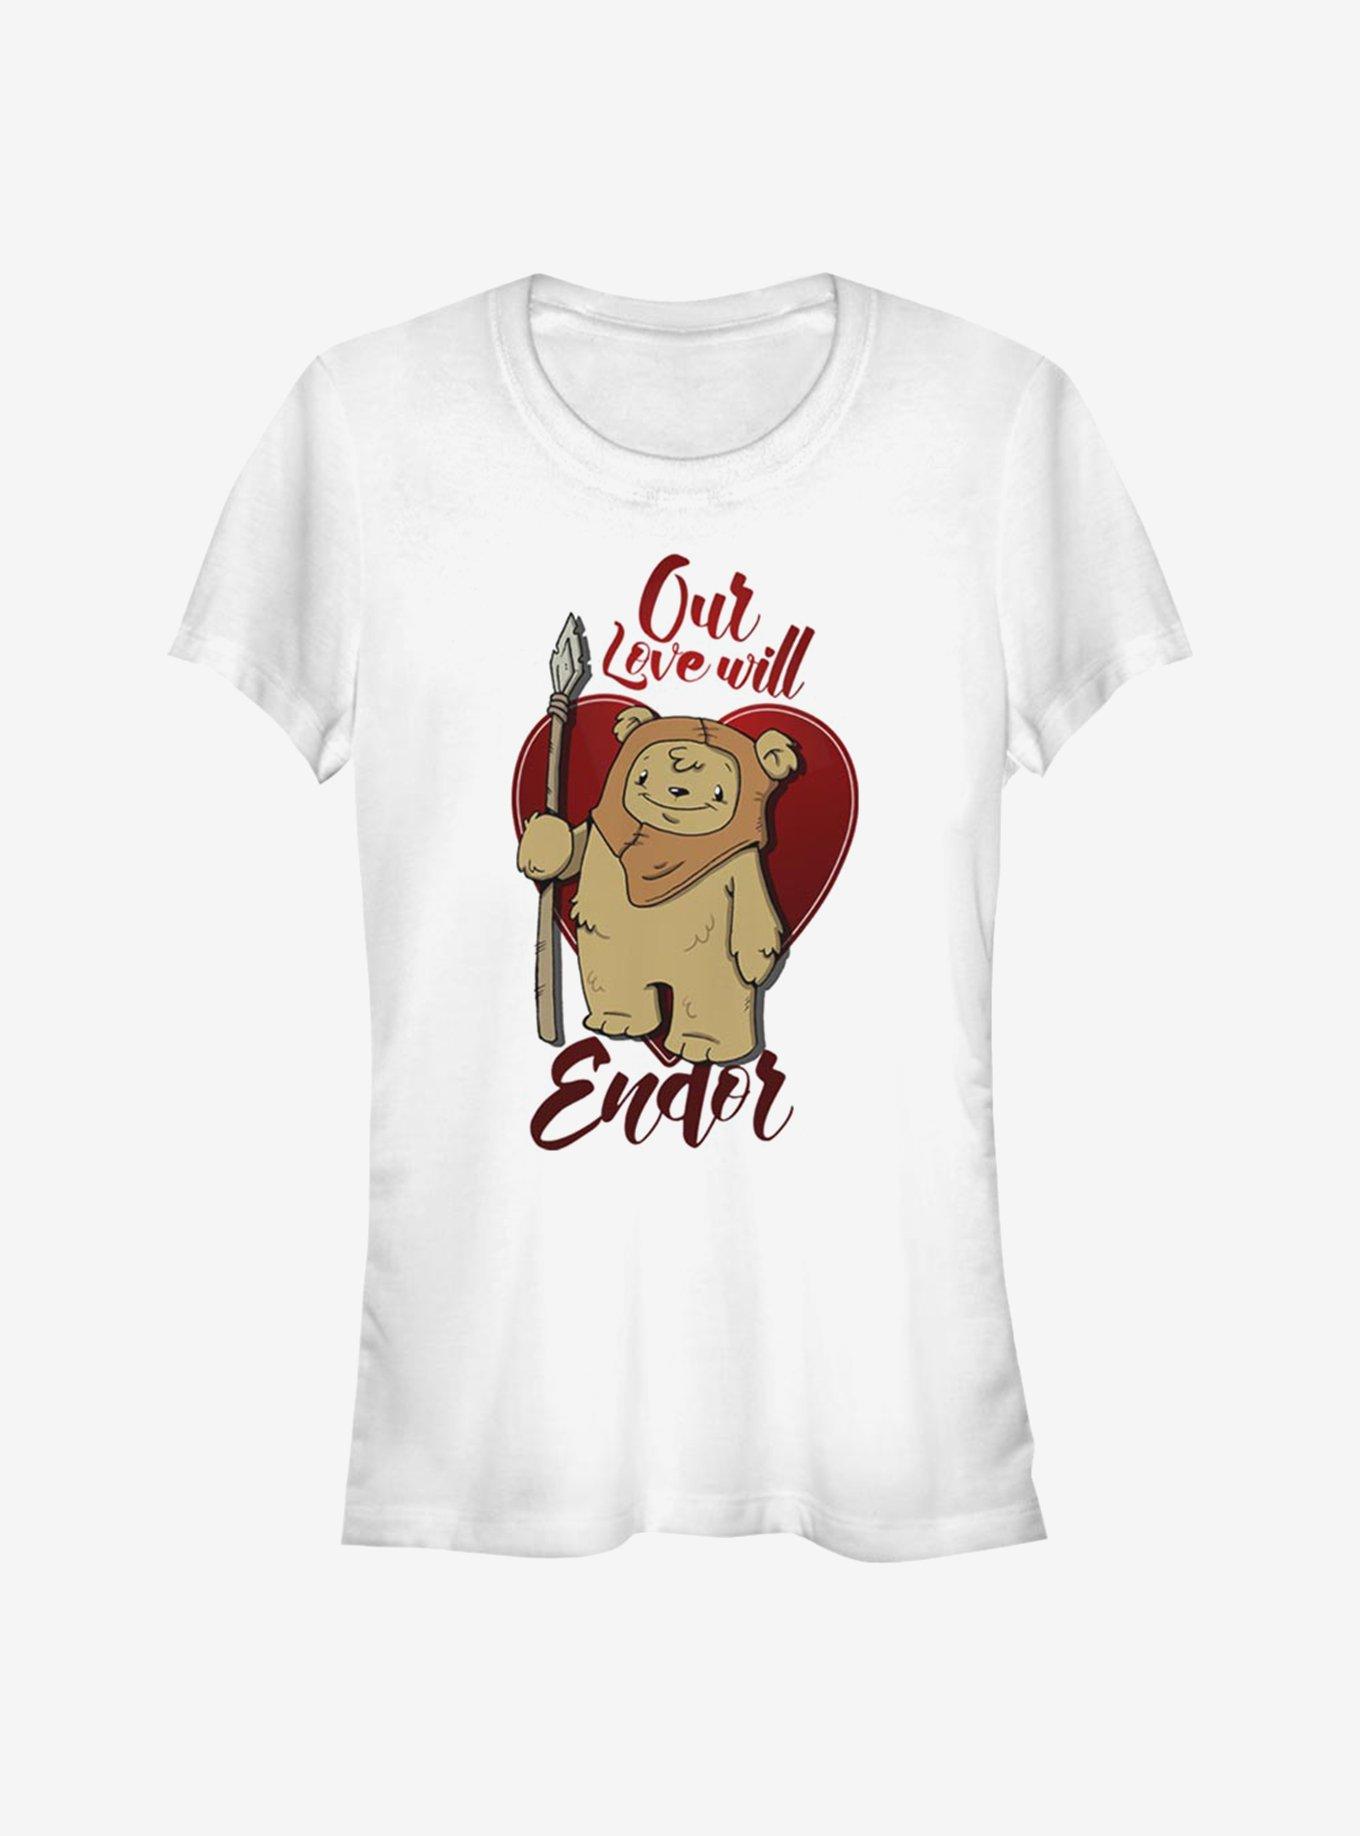 Star Wars Love Will Endor Girls T-Shirt